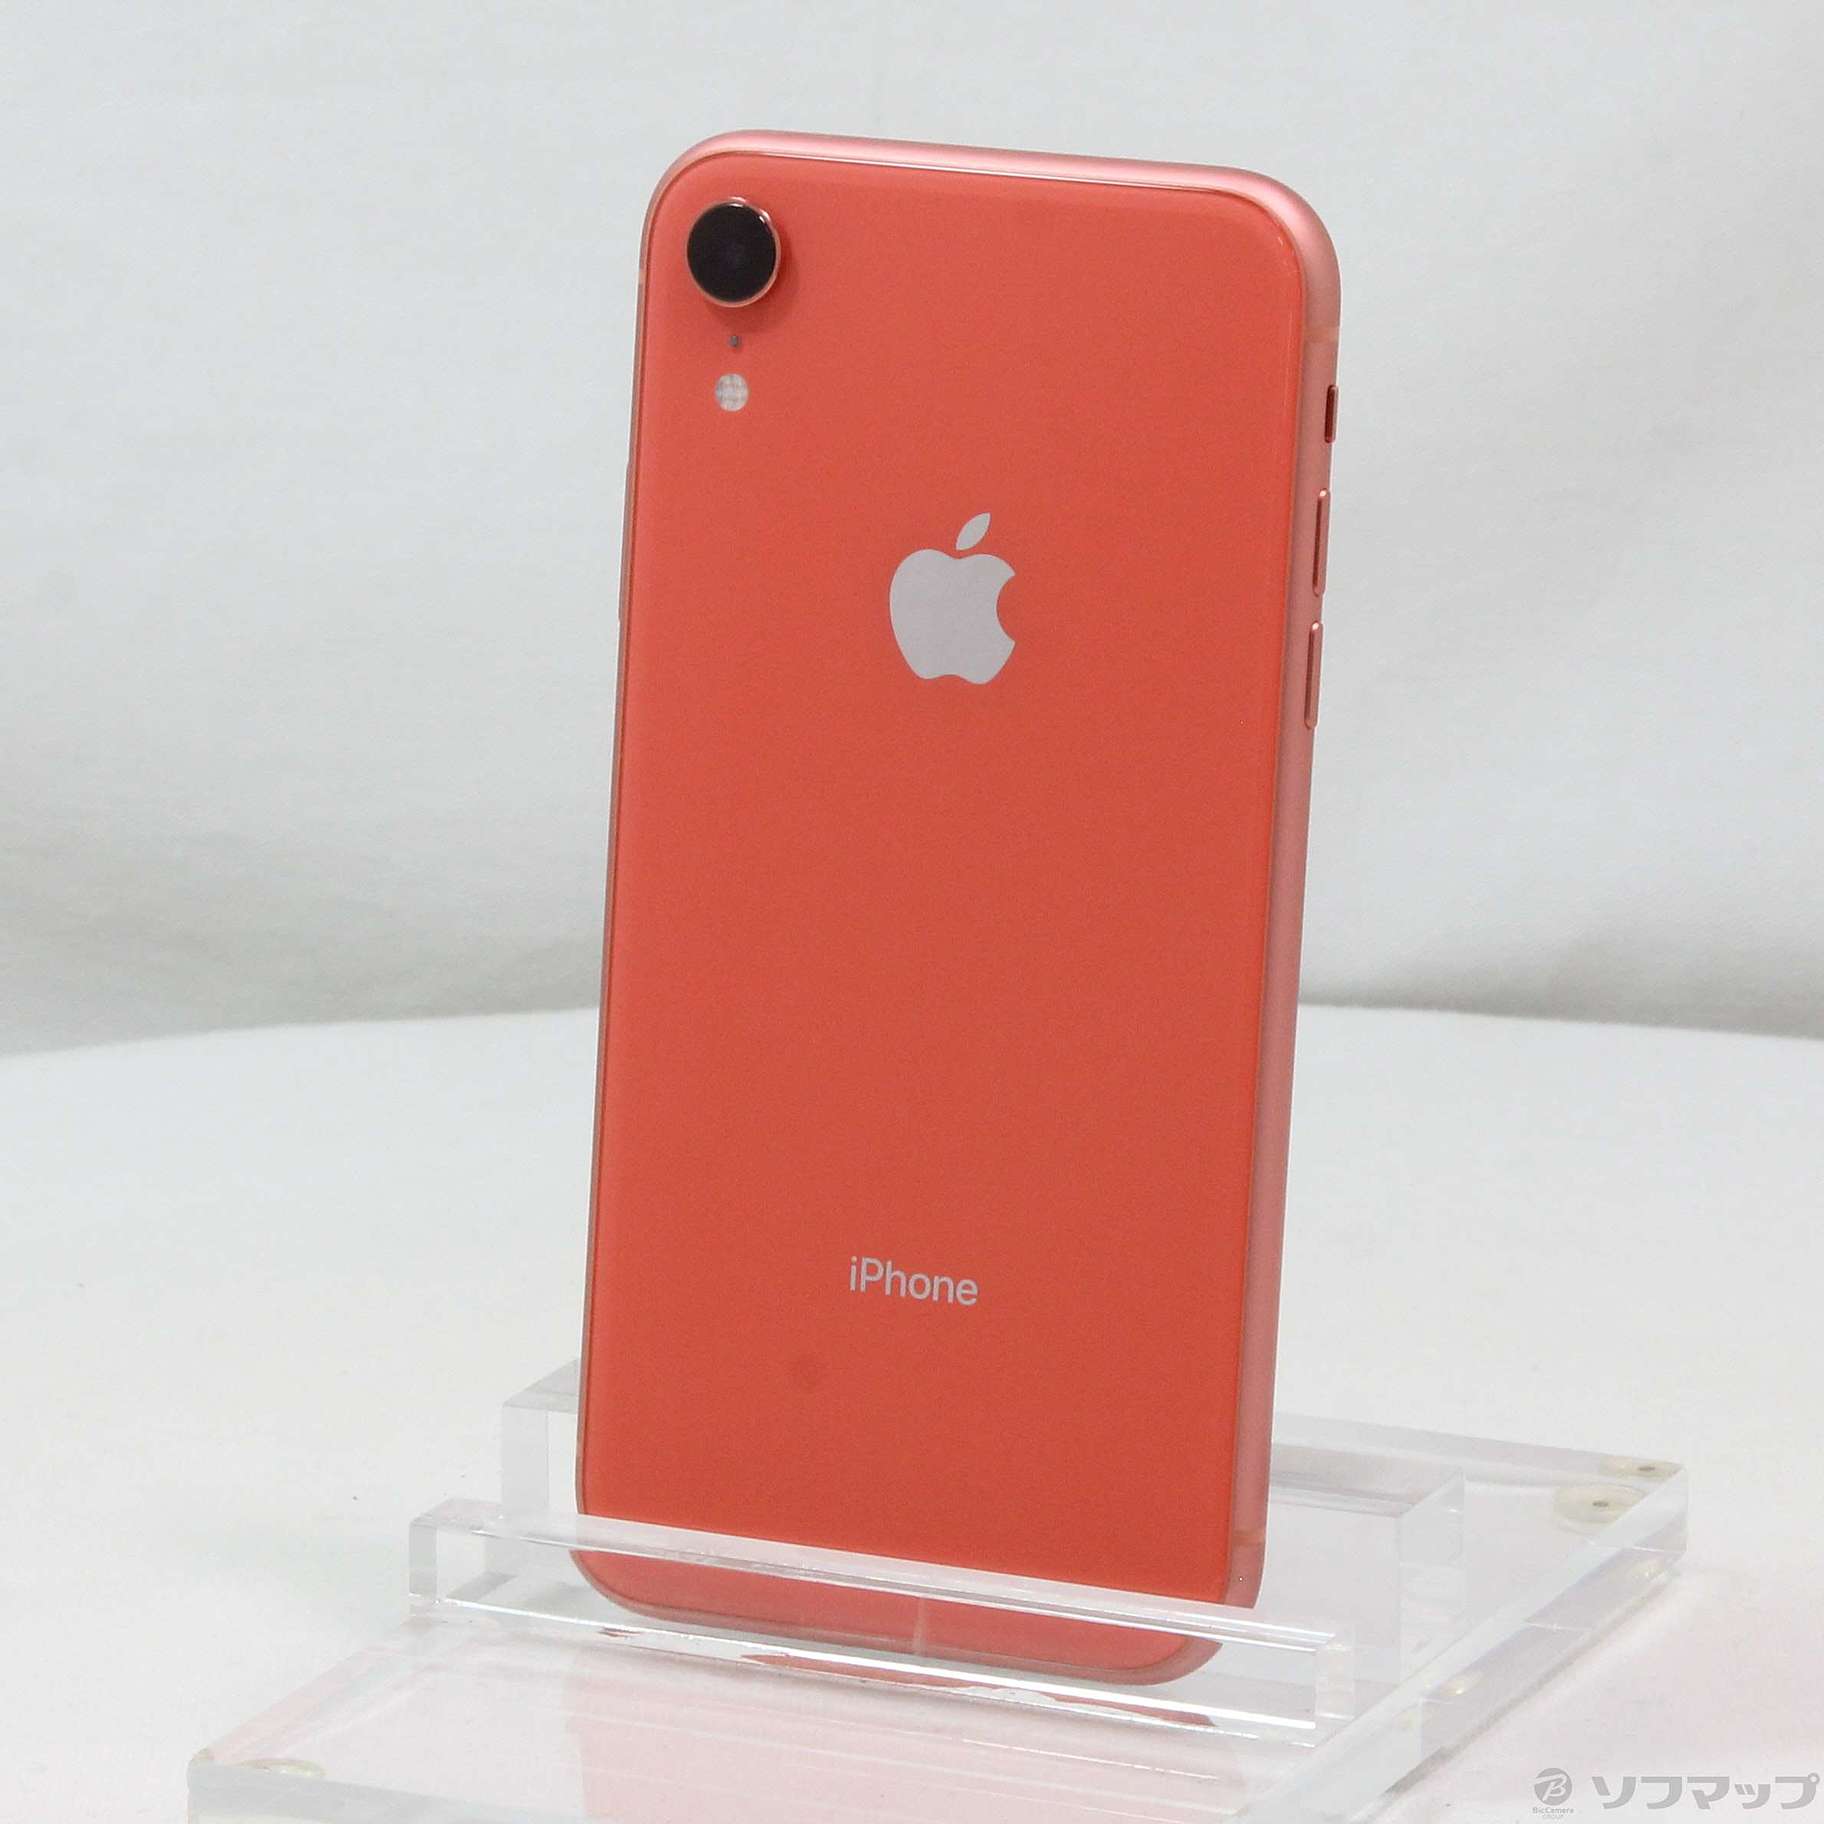 iPhoneXR coral コーラル 64GB